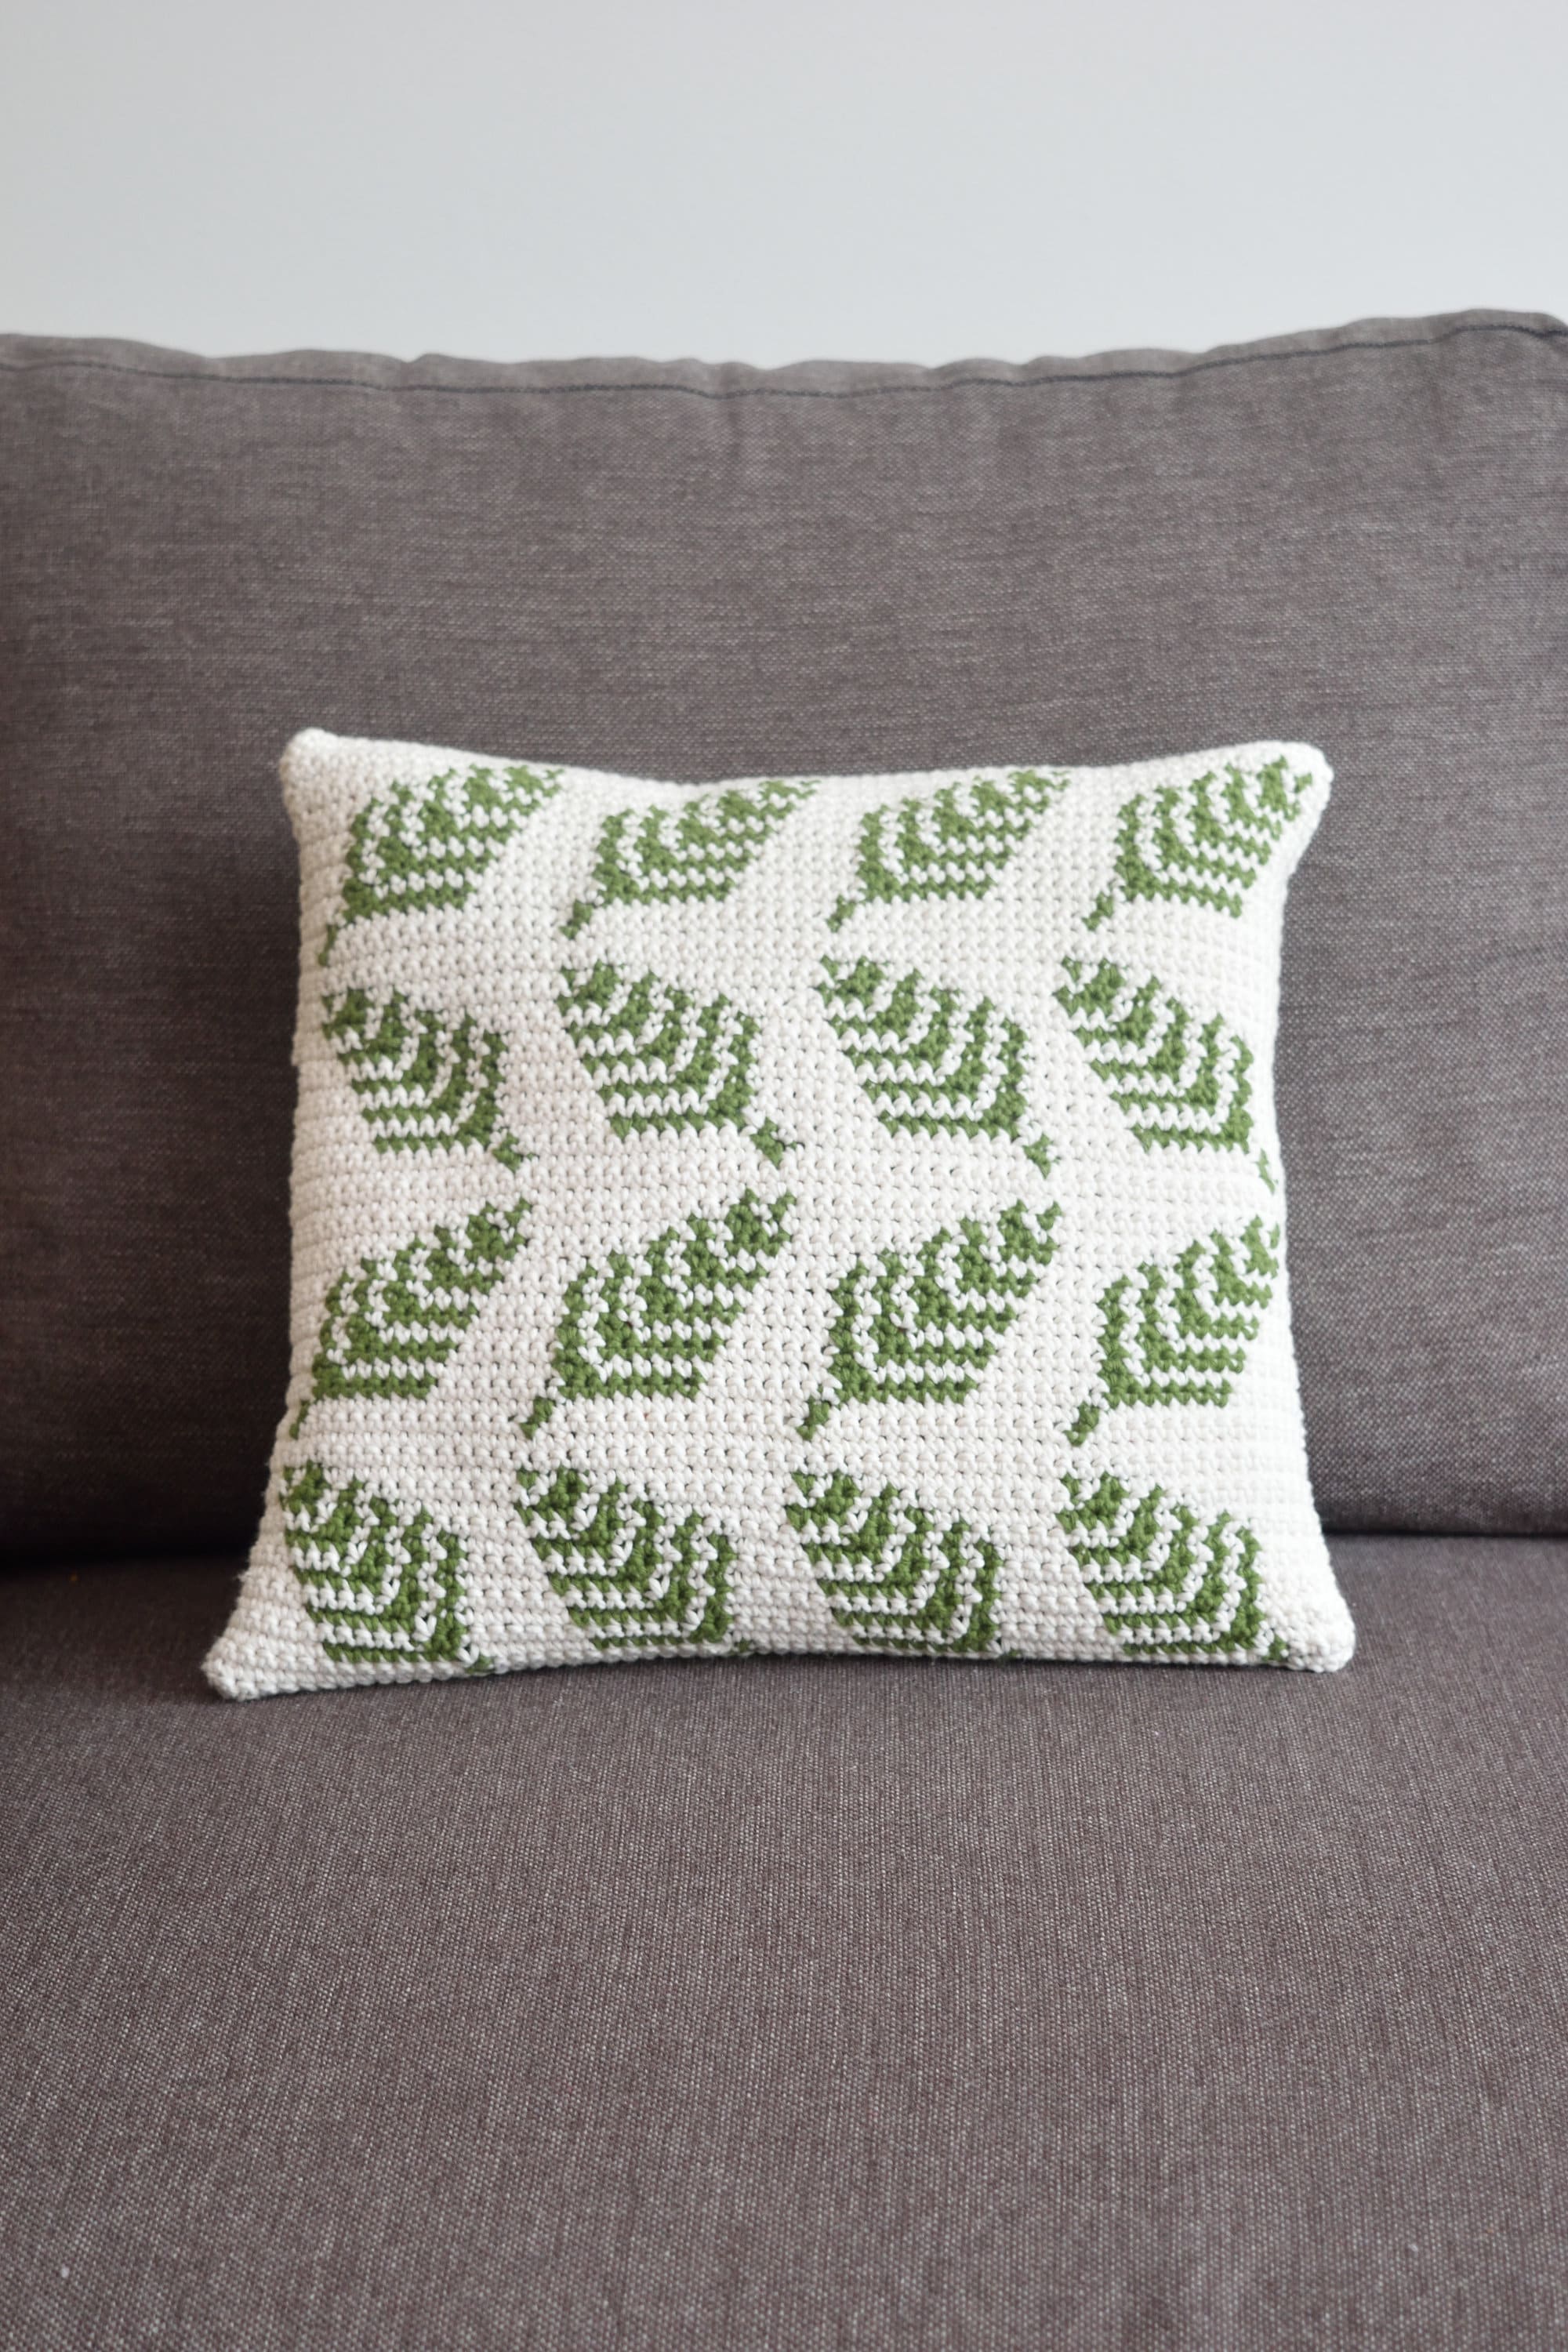 Dahlia Crochet Pillow Cover: Free Pattern - MyCrochetory